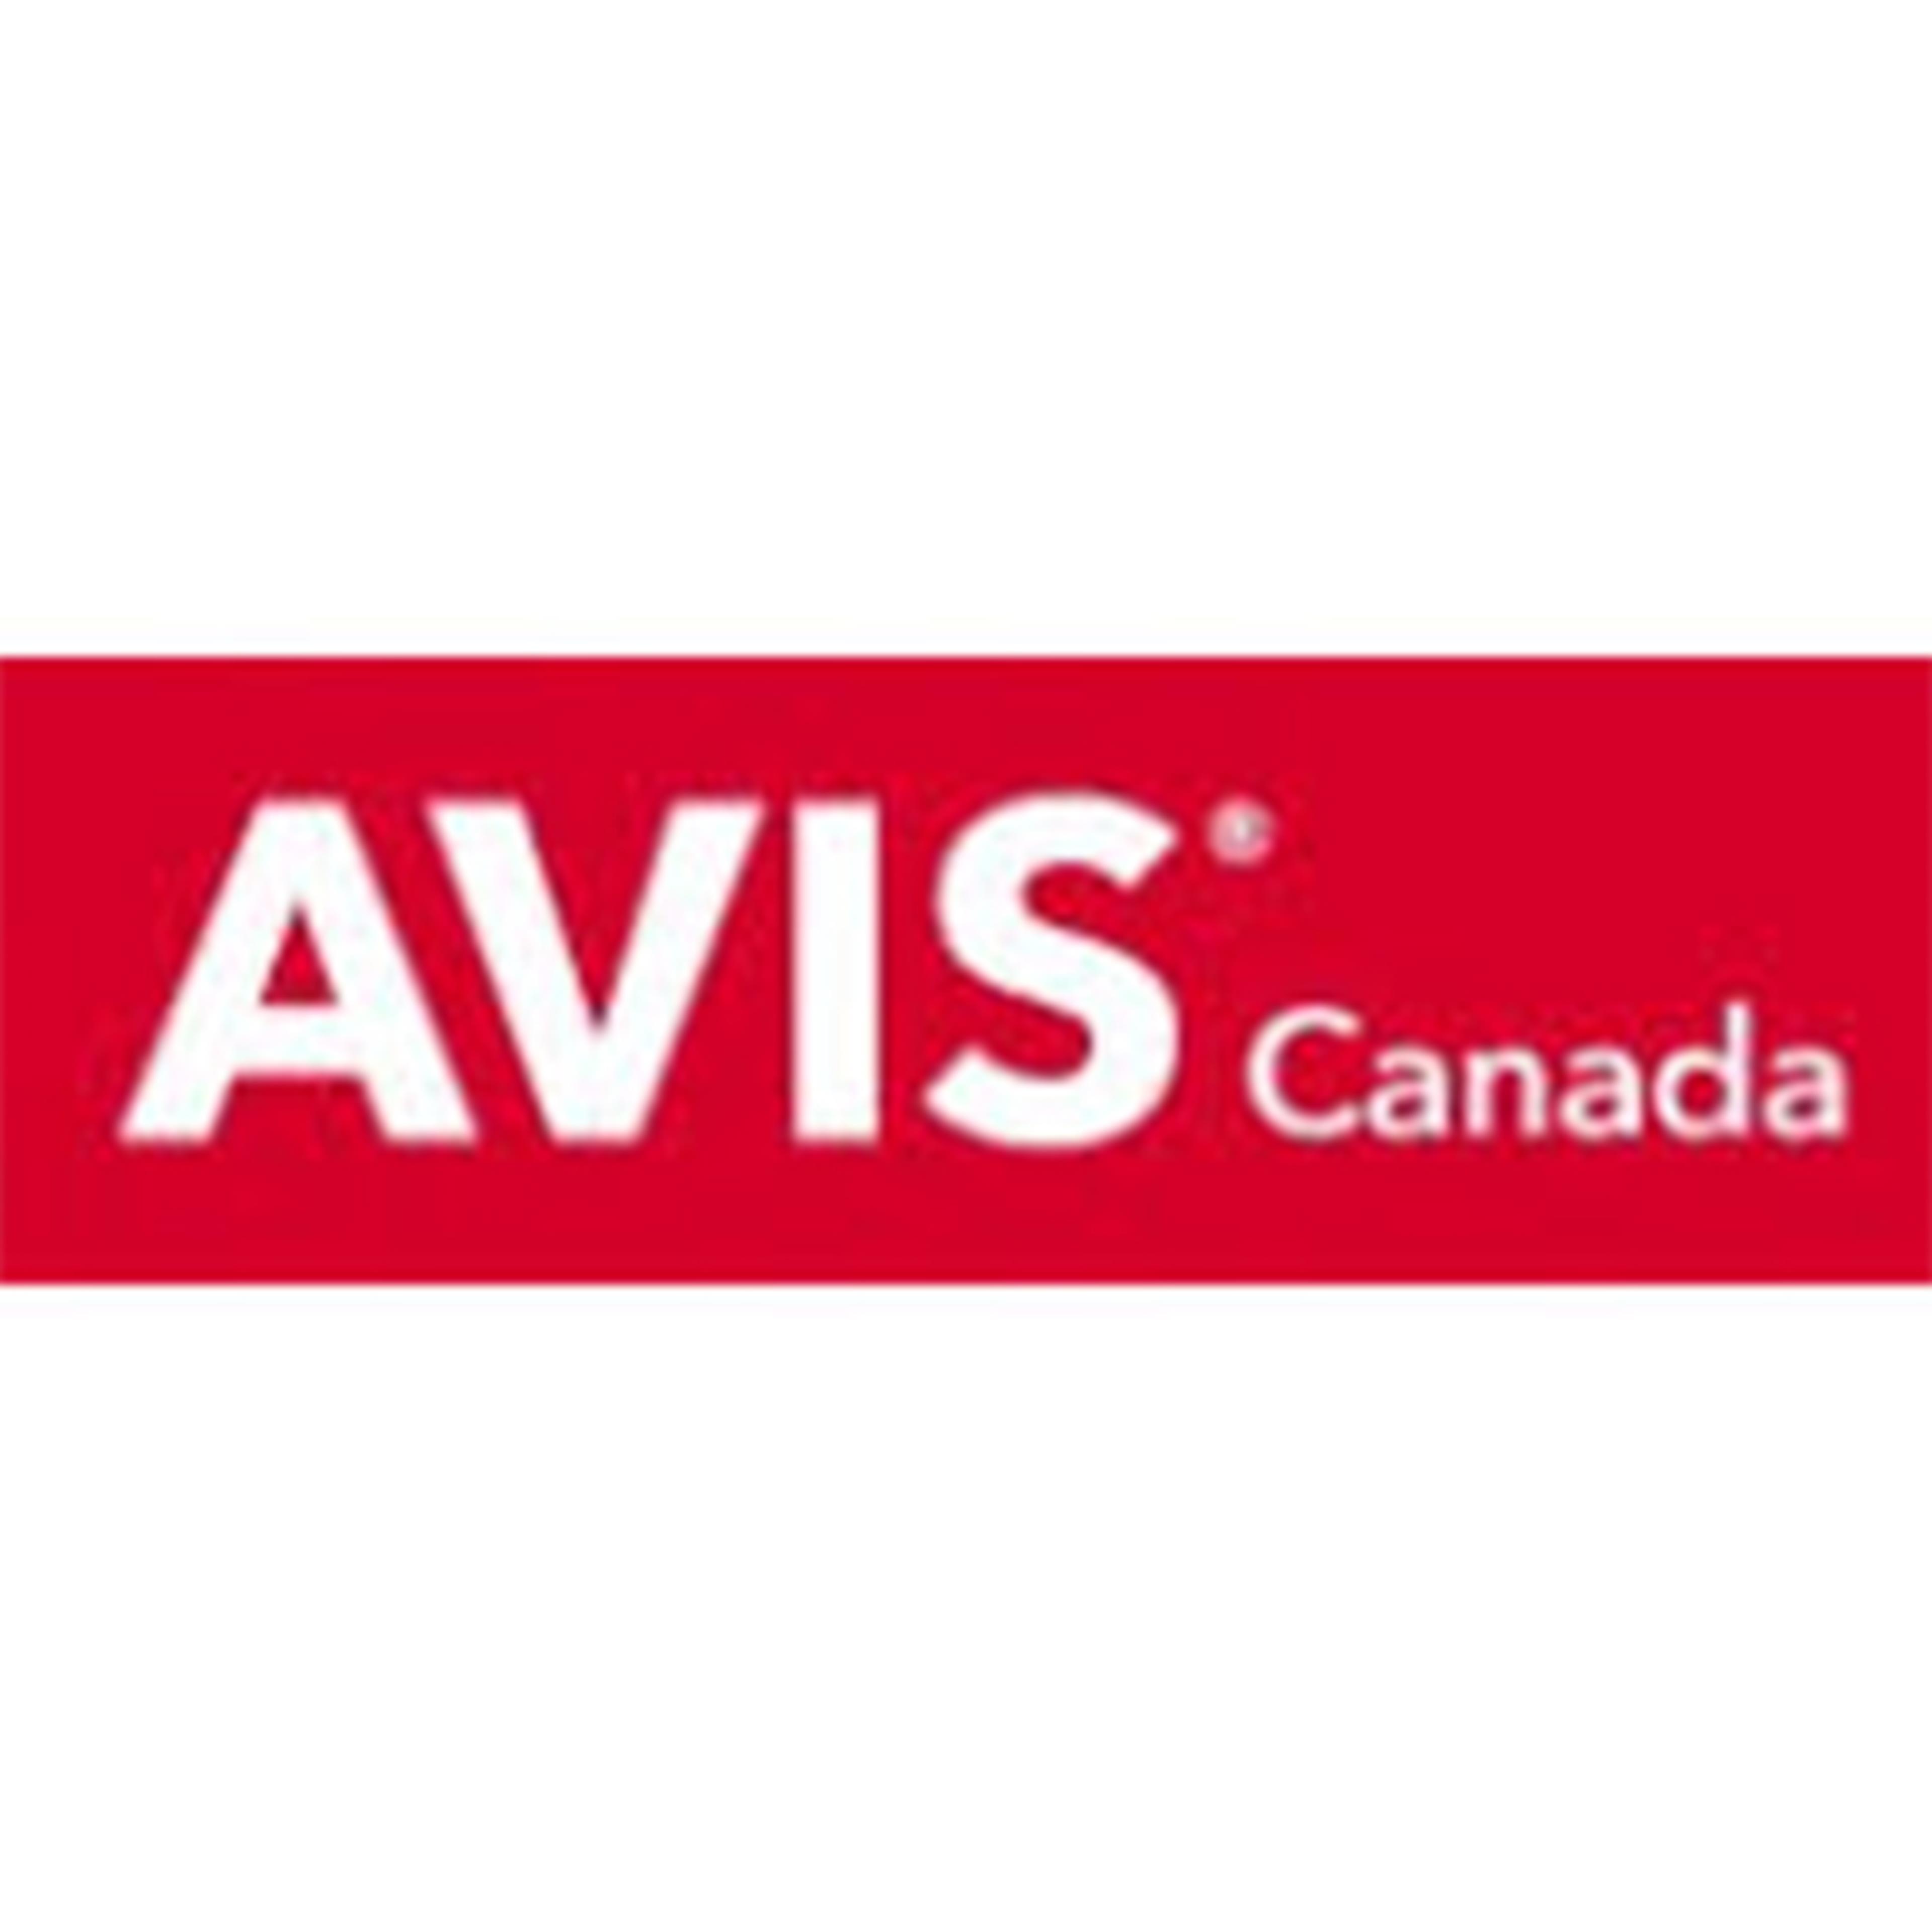 AVIS Canada logo